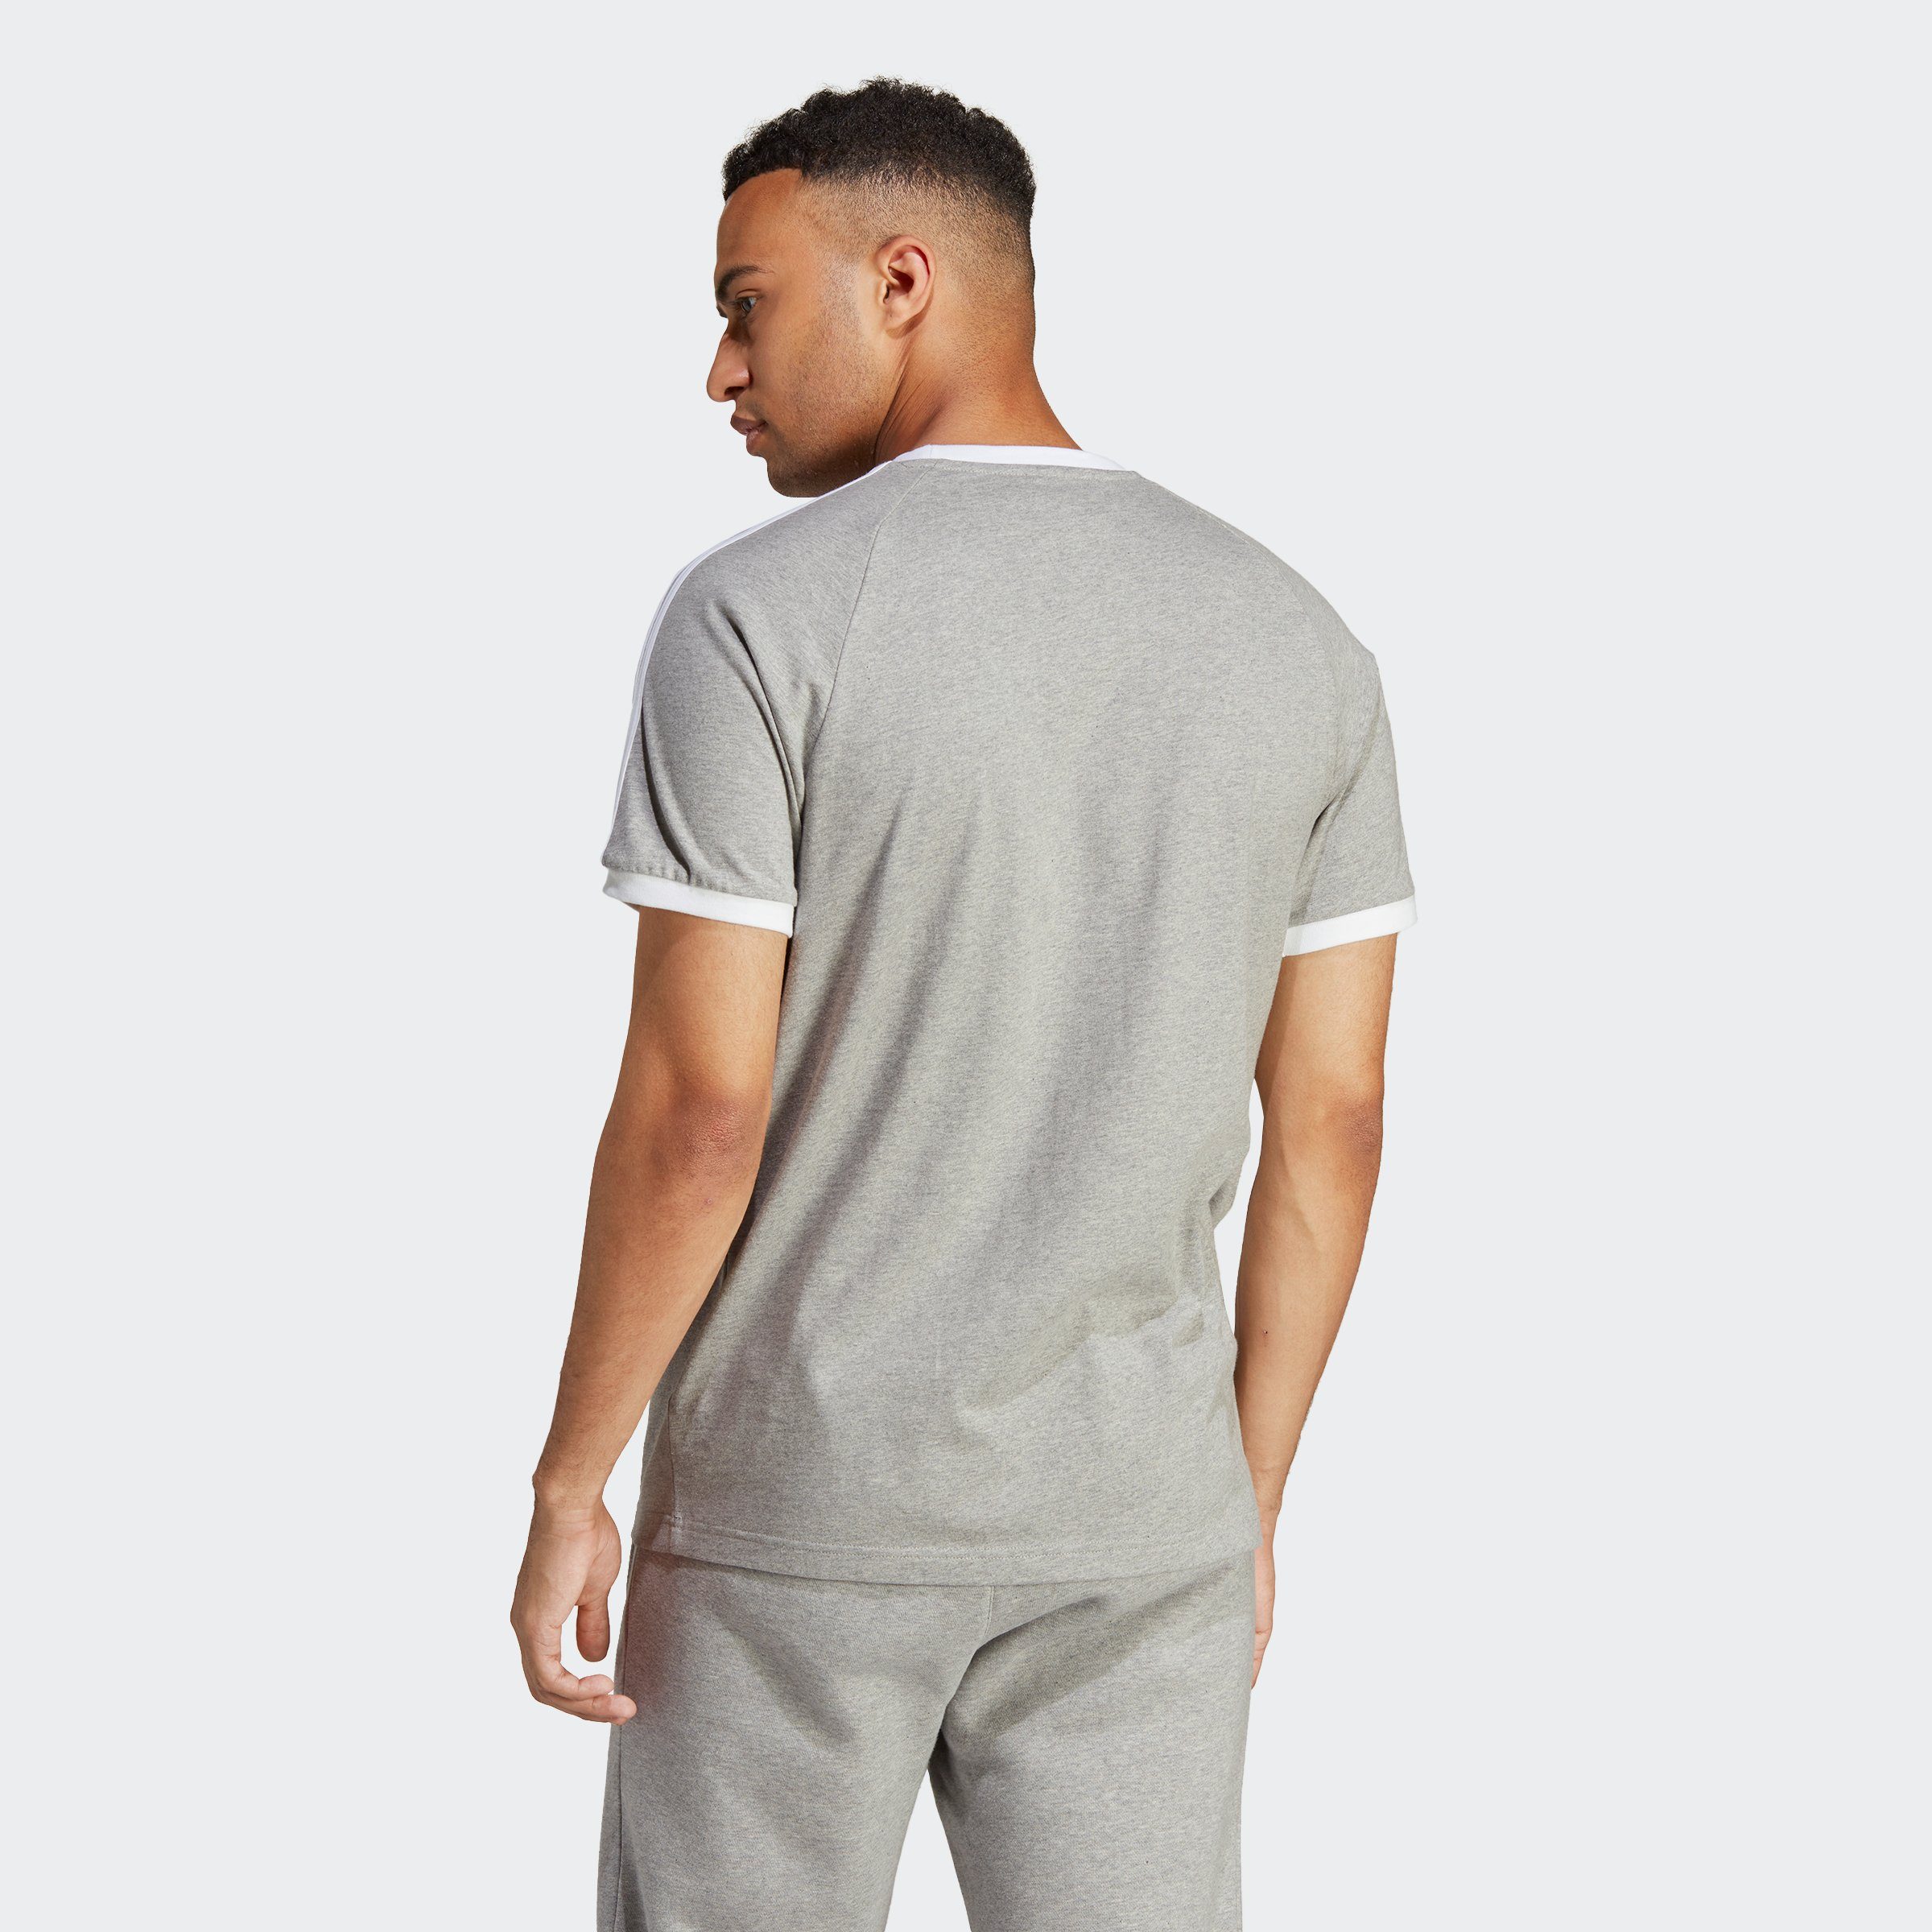 adidas Grey TEE Heather Originals 3-STRIPES Medium T-Shirt